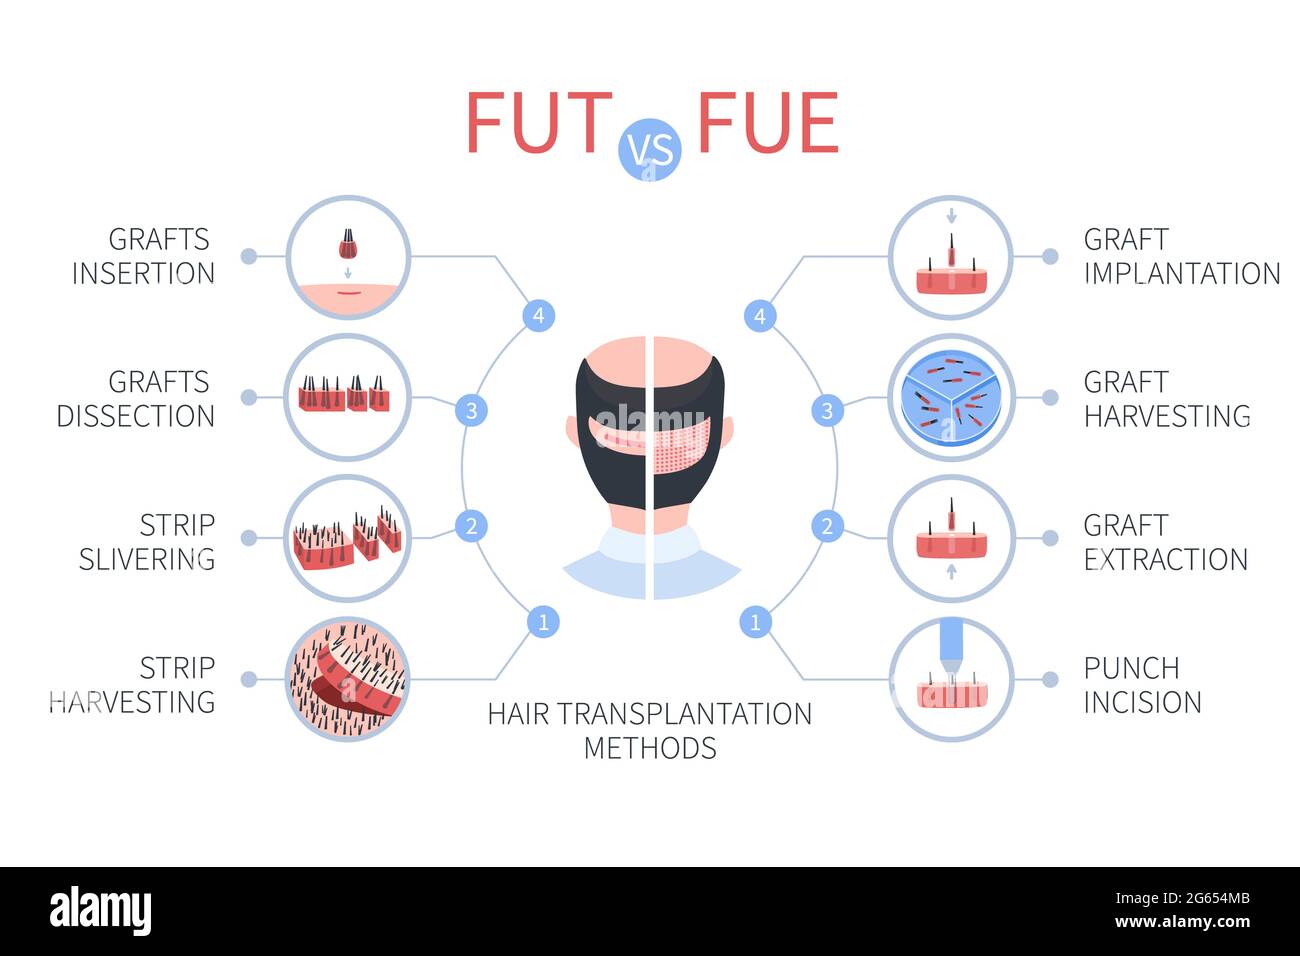 FUE vs FUT hair transplantation, illustration Stock Photo